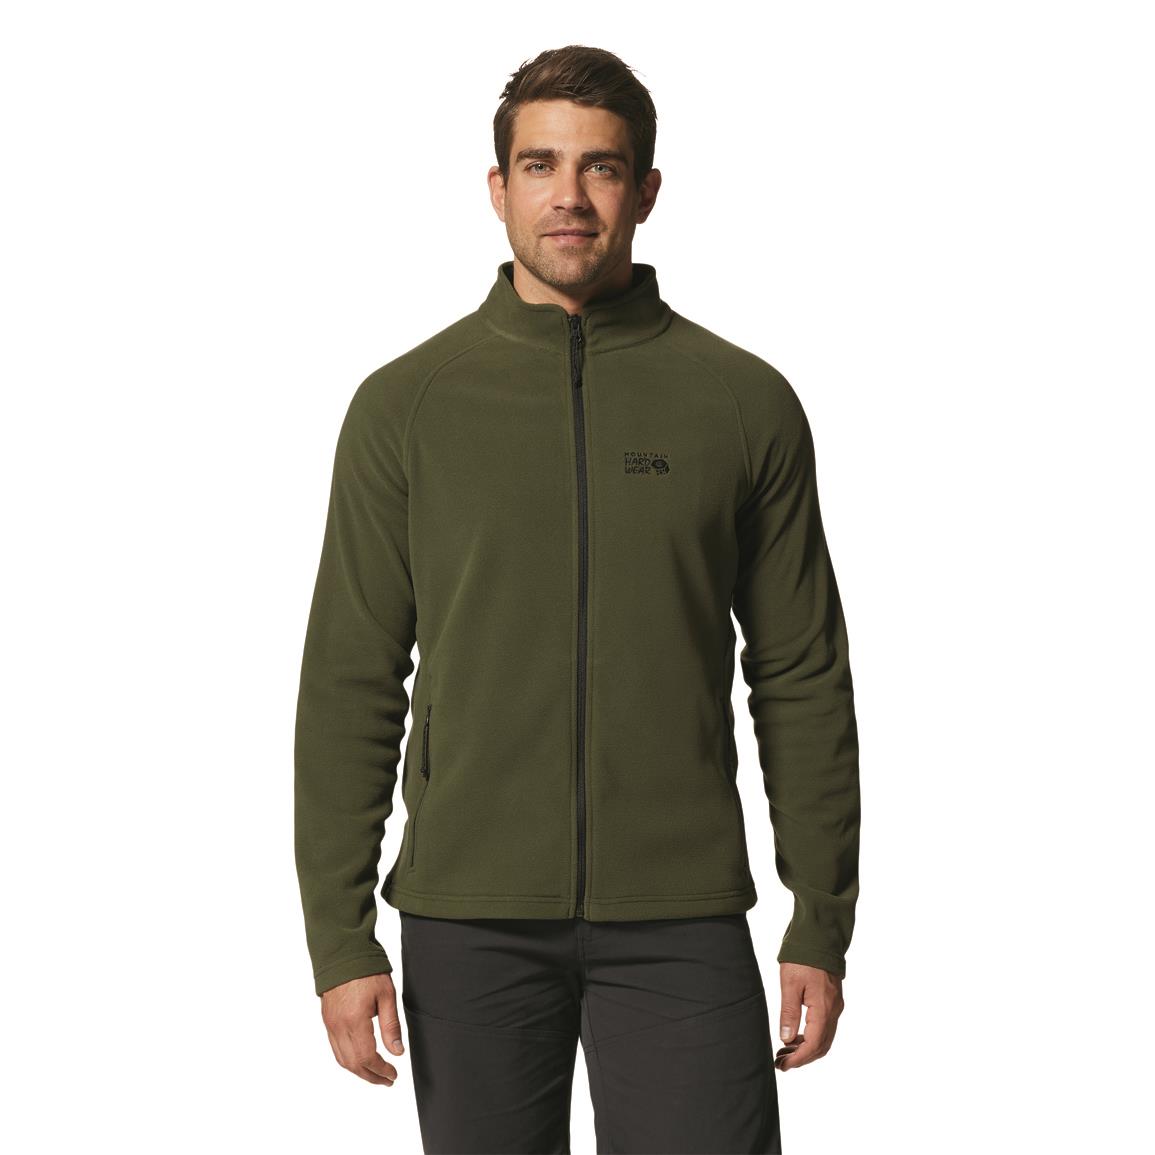 Mountain Hardwear Men's Polartec Microfleece Full-zip Jacket, Surplus Green